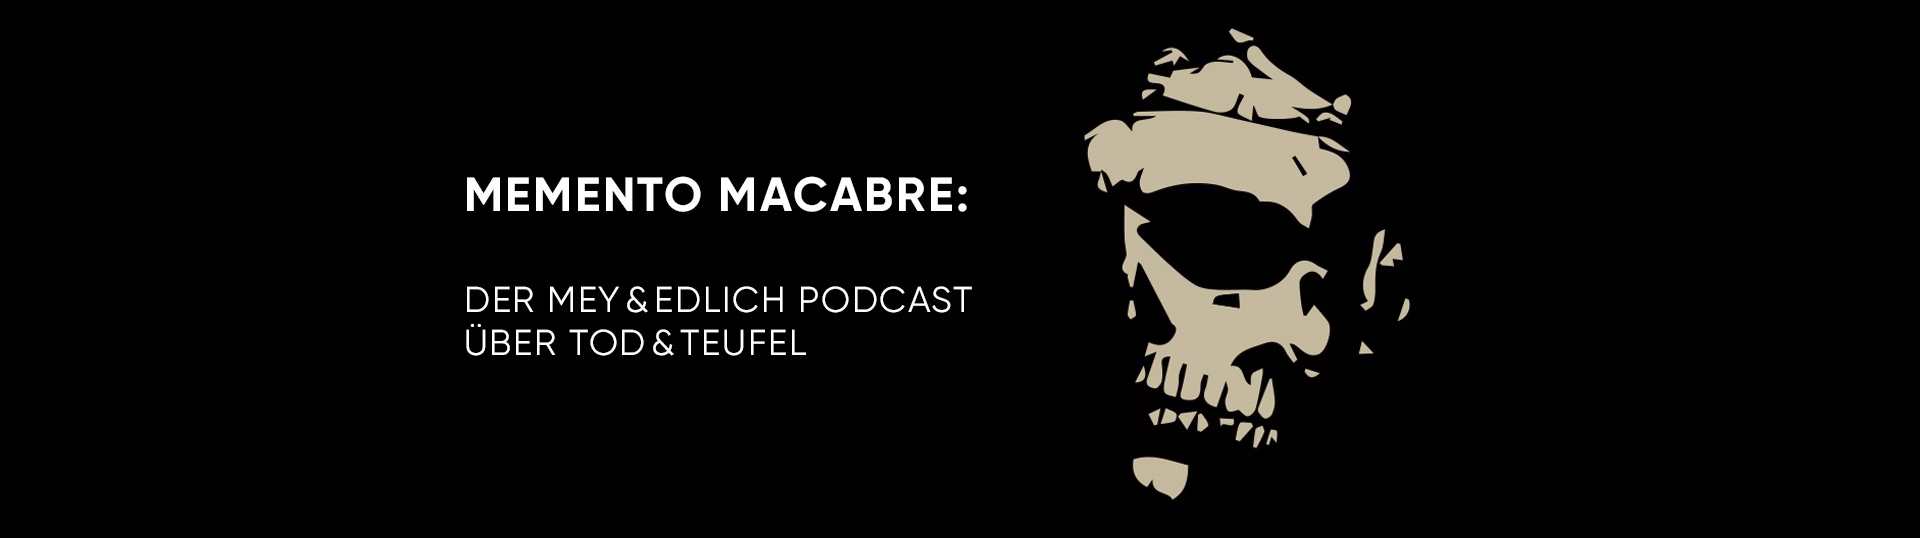 Logo des Podcasts "Memento macabre"